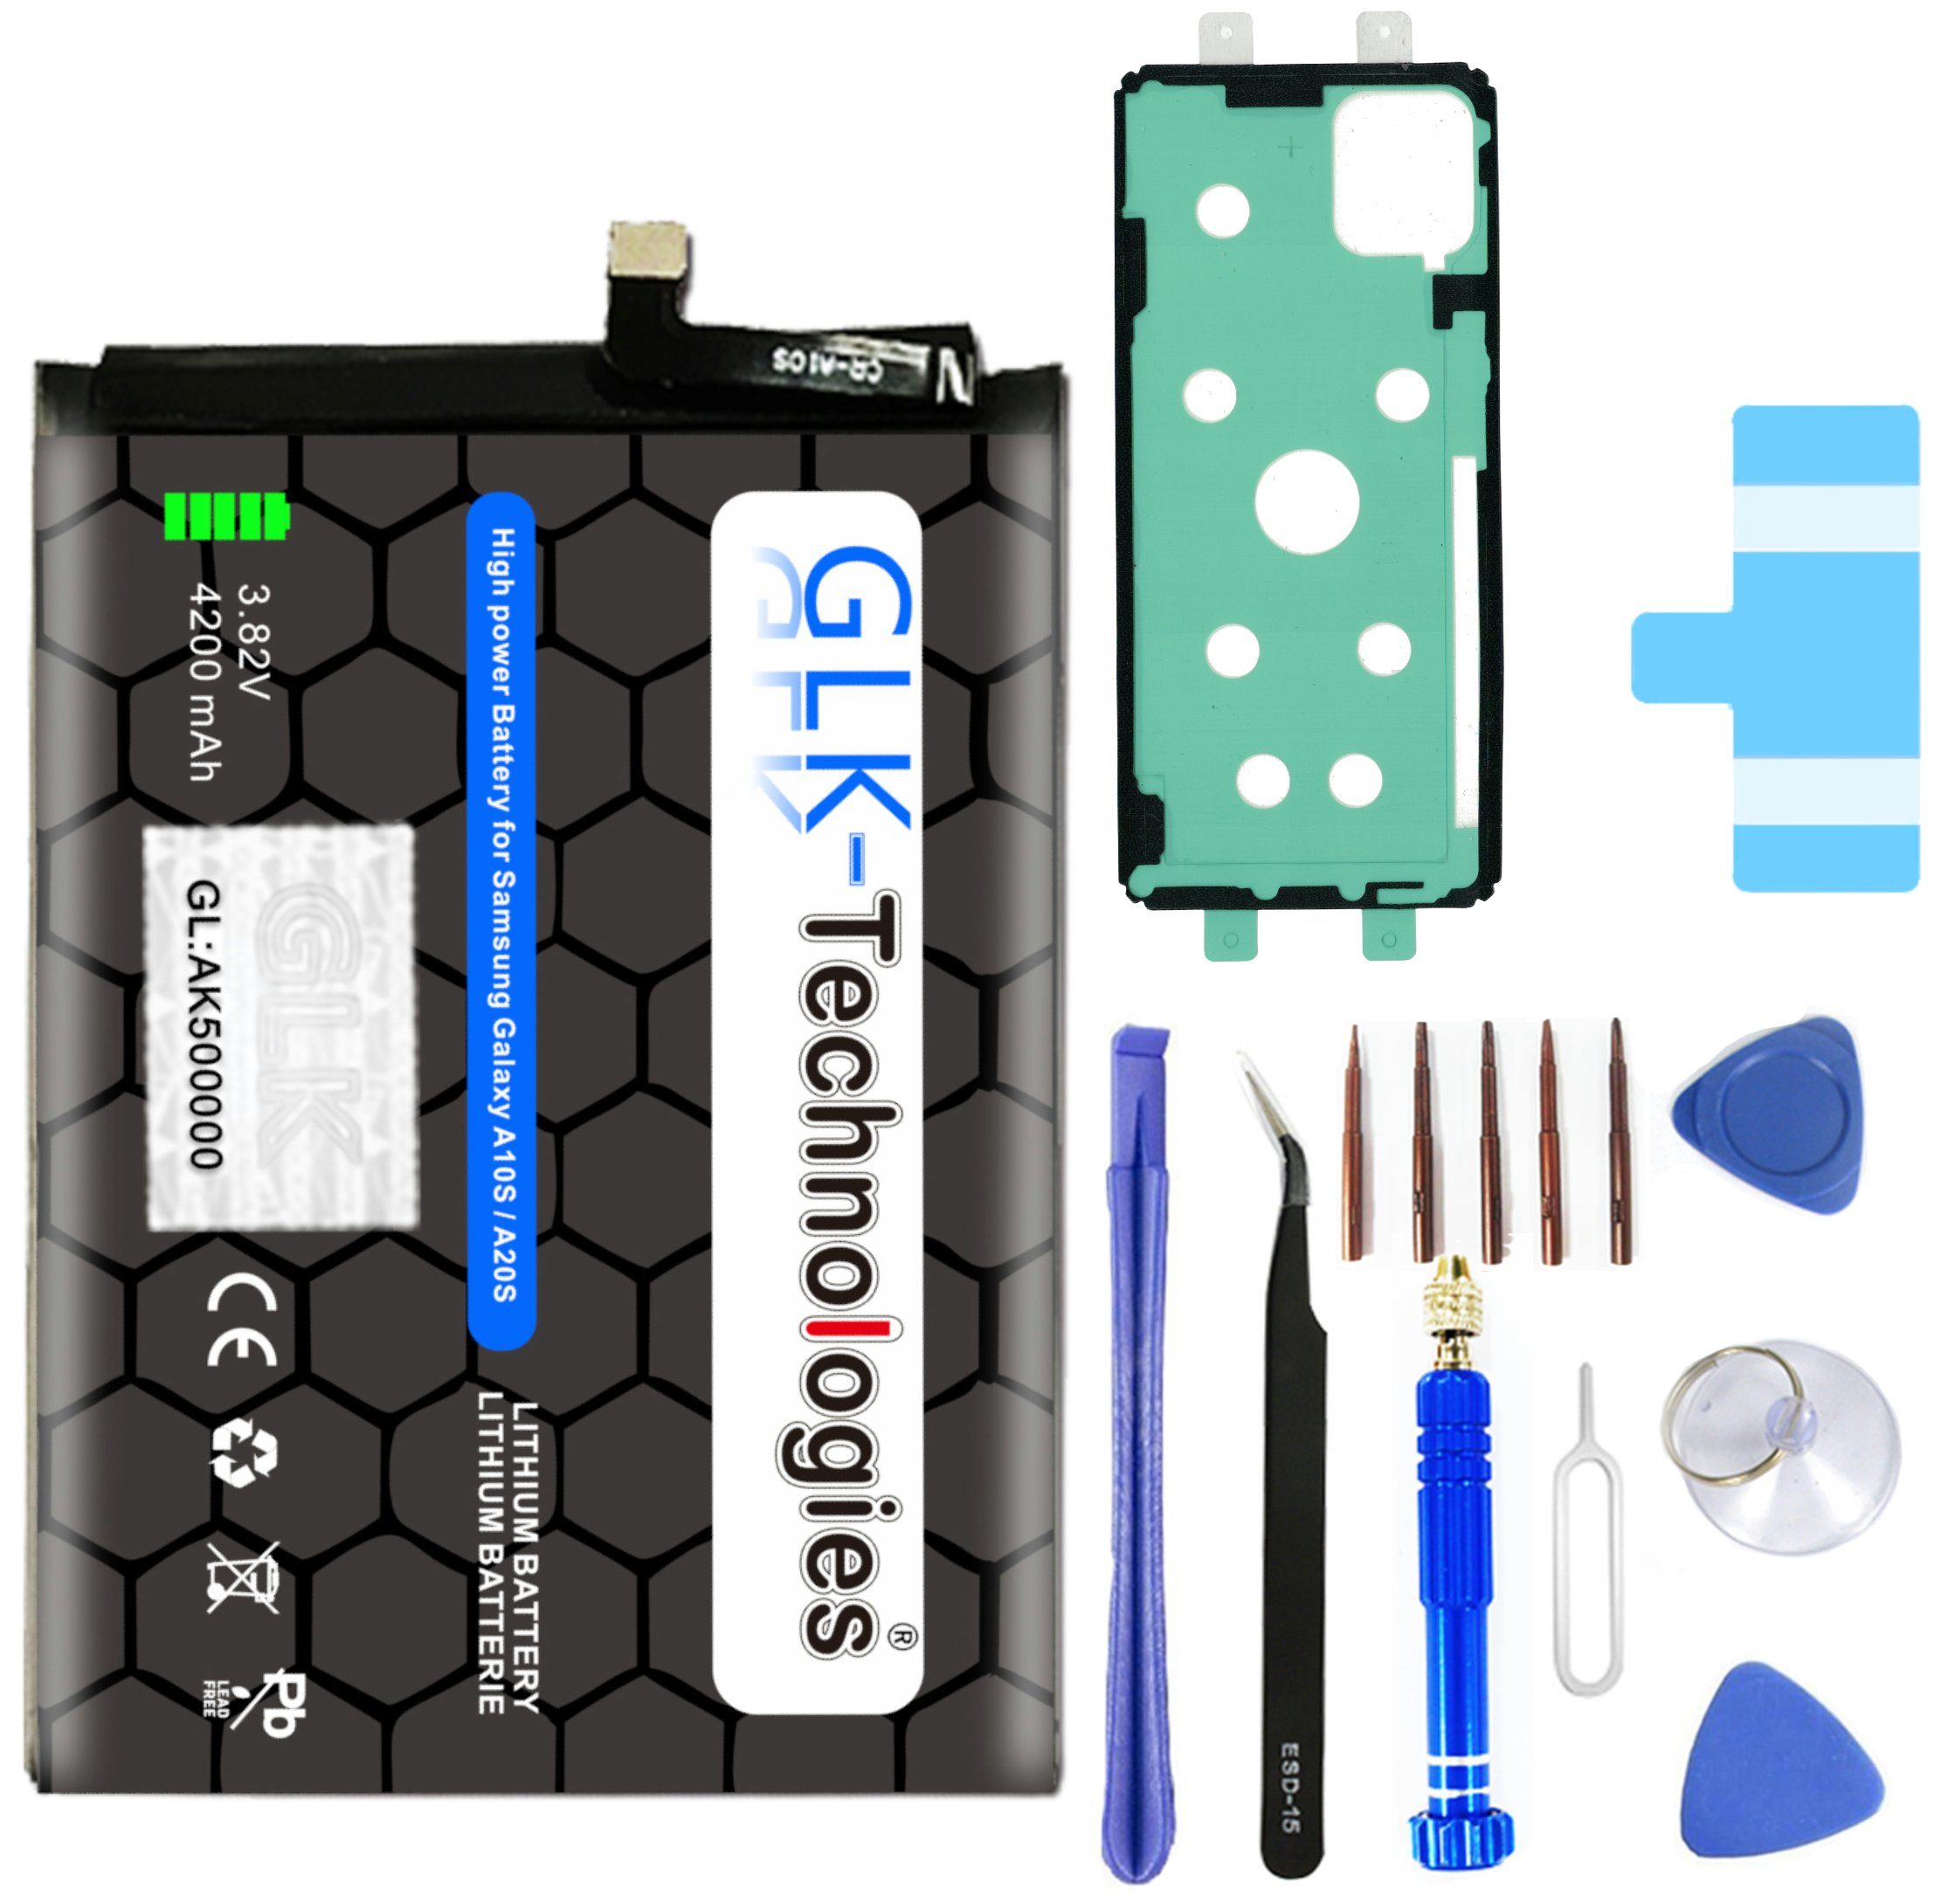 GLK-Technologies High Power Ersatzakku kompatibel Samsung Profi Set Handy-Akku mit Battery, inkl. mAh 4200 GLK-Technologies A20s NUE Werkzeug (A207F), accu, (3.8 Akku, V) 4200mAh Kit Galaxy